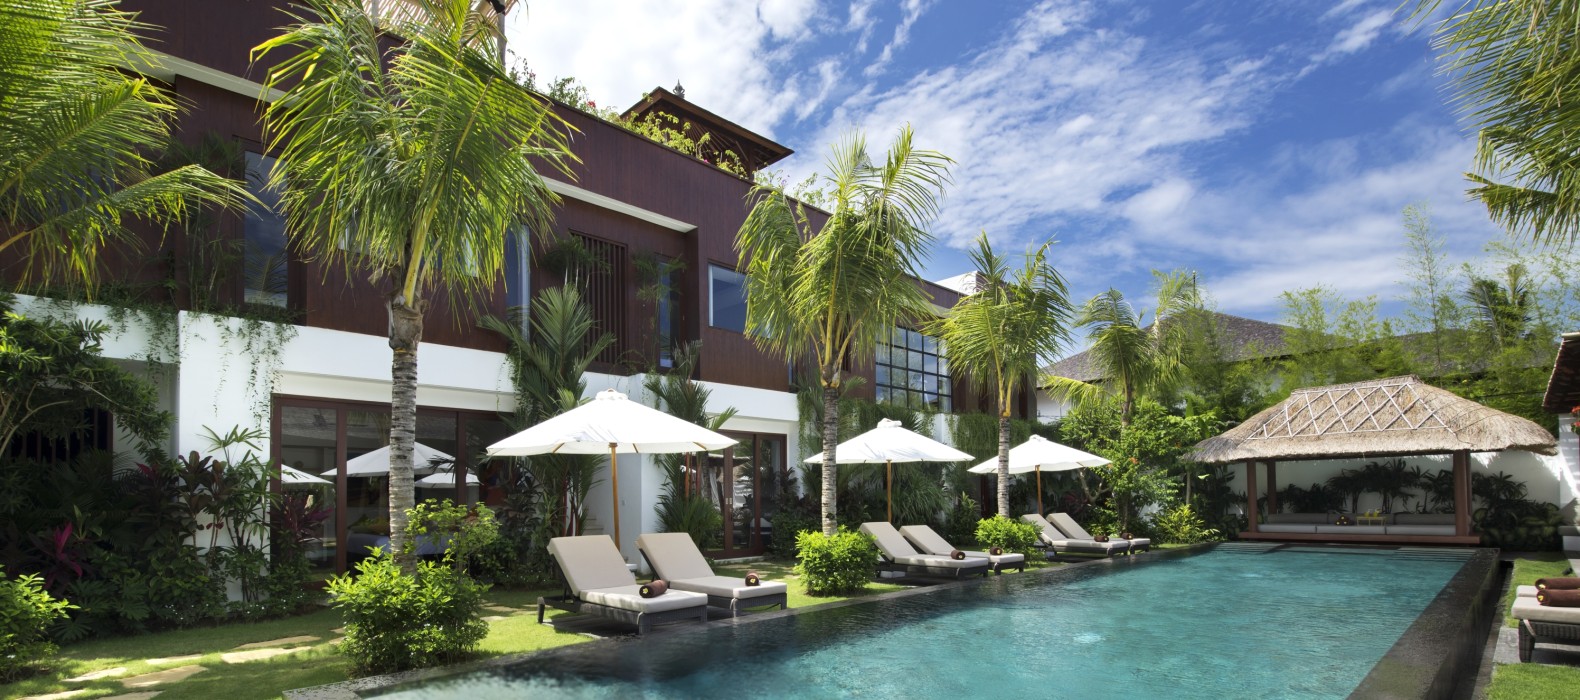 Exterior pool view of Villa Anam in Bali